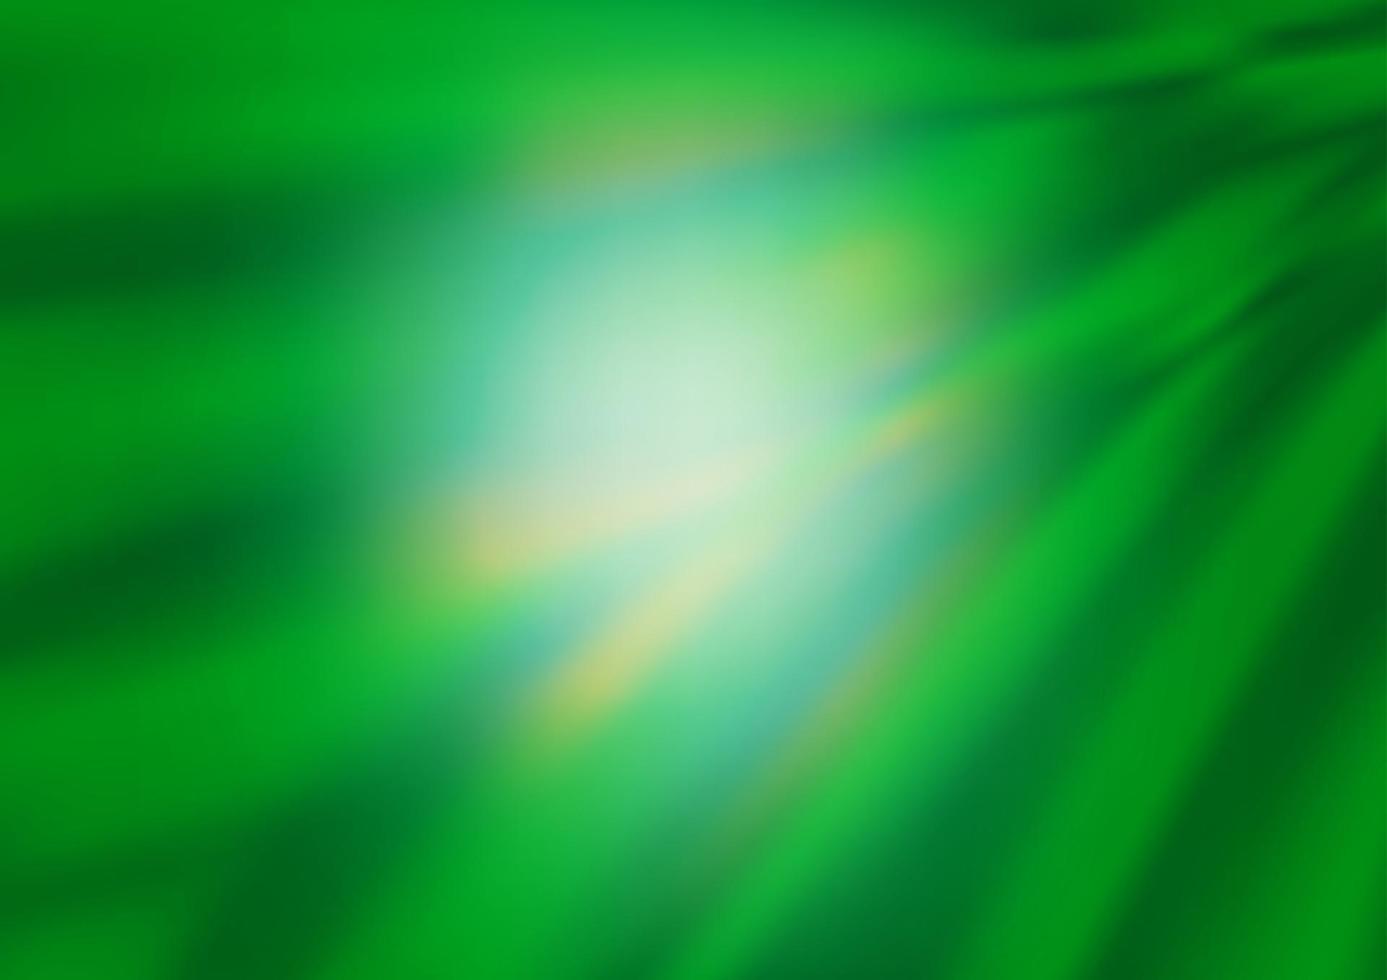 hellgrüner Vektor abstrakter unscharfer Hintergrund.